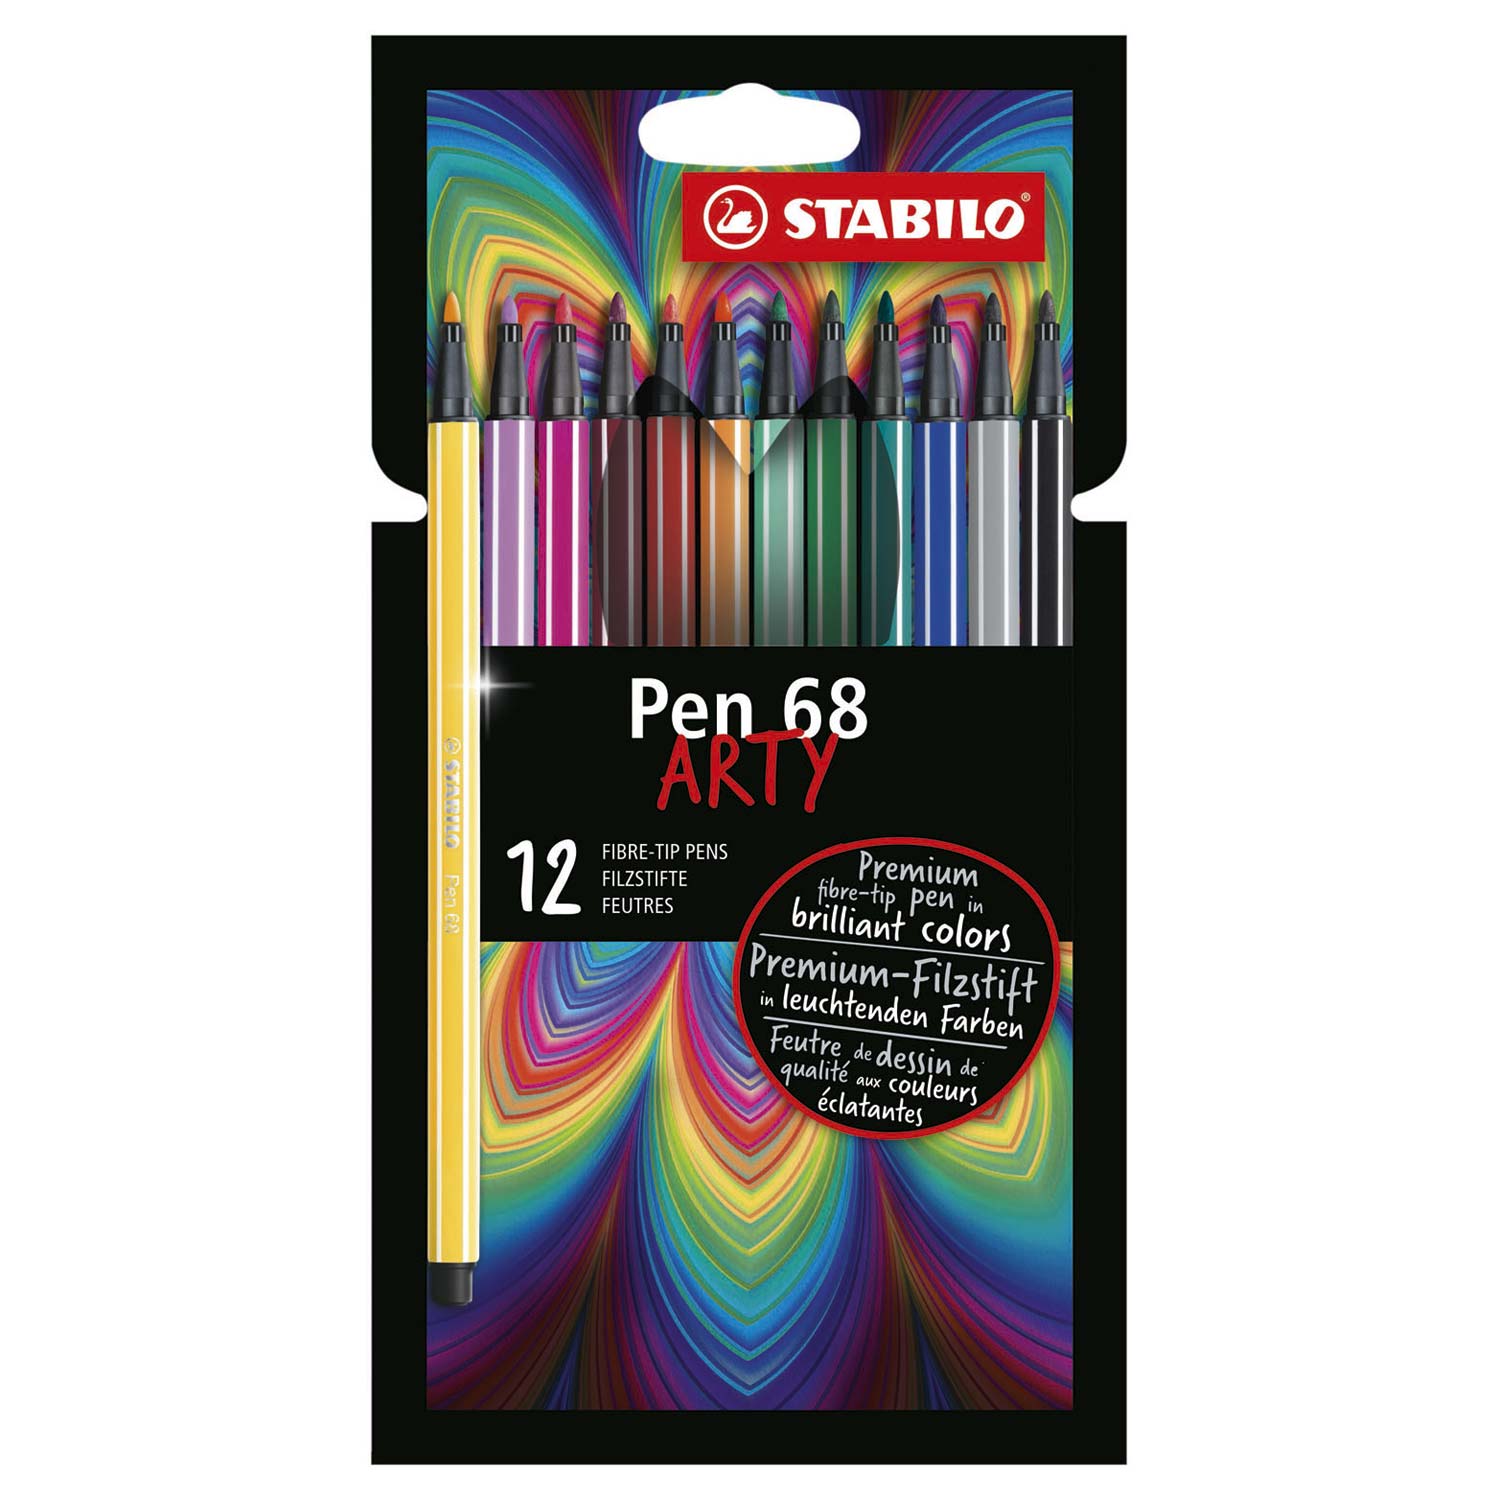 letterlijk Kangoeroe nikkel STABILO Pen 68 ARTY felt-tip pens, 12 pieces. | Thimble Toys